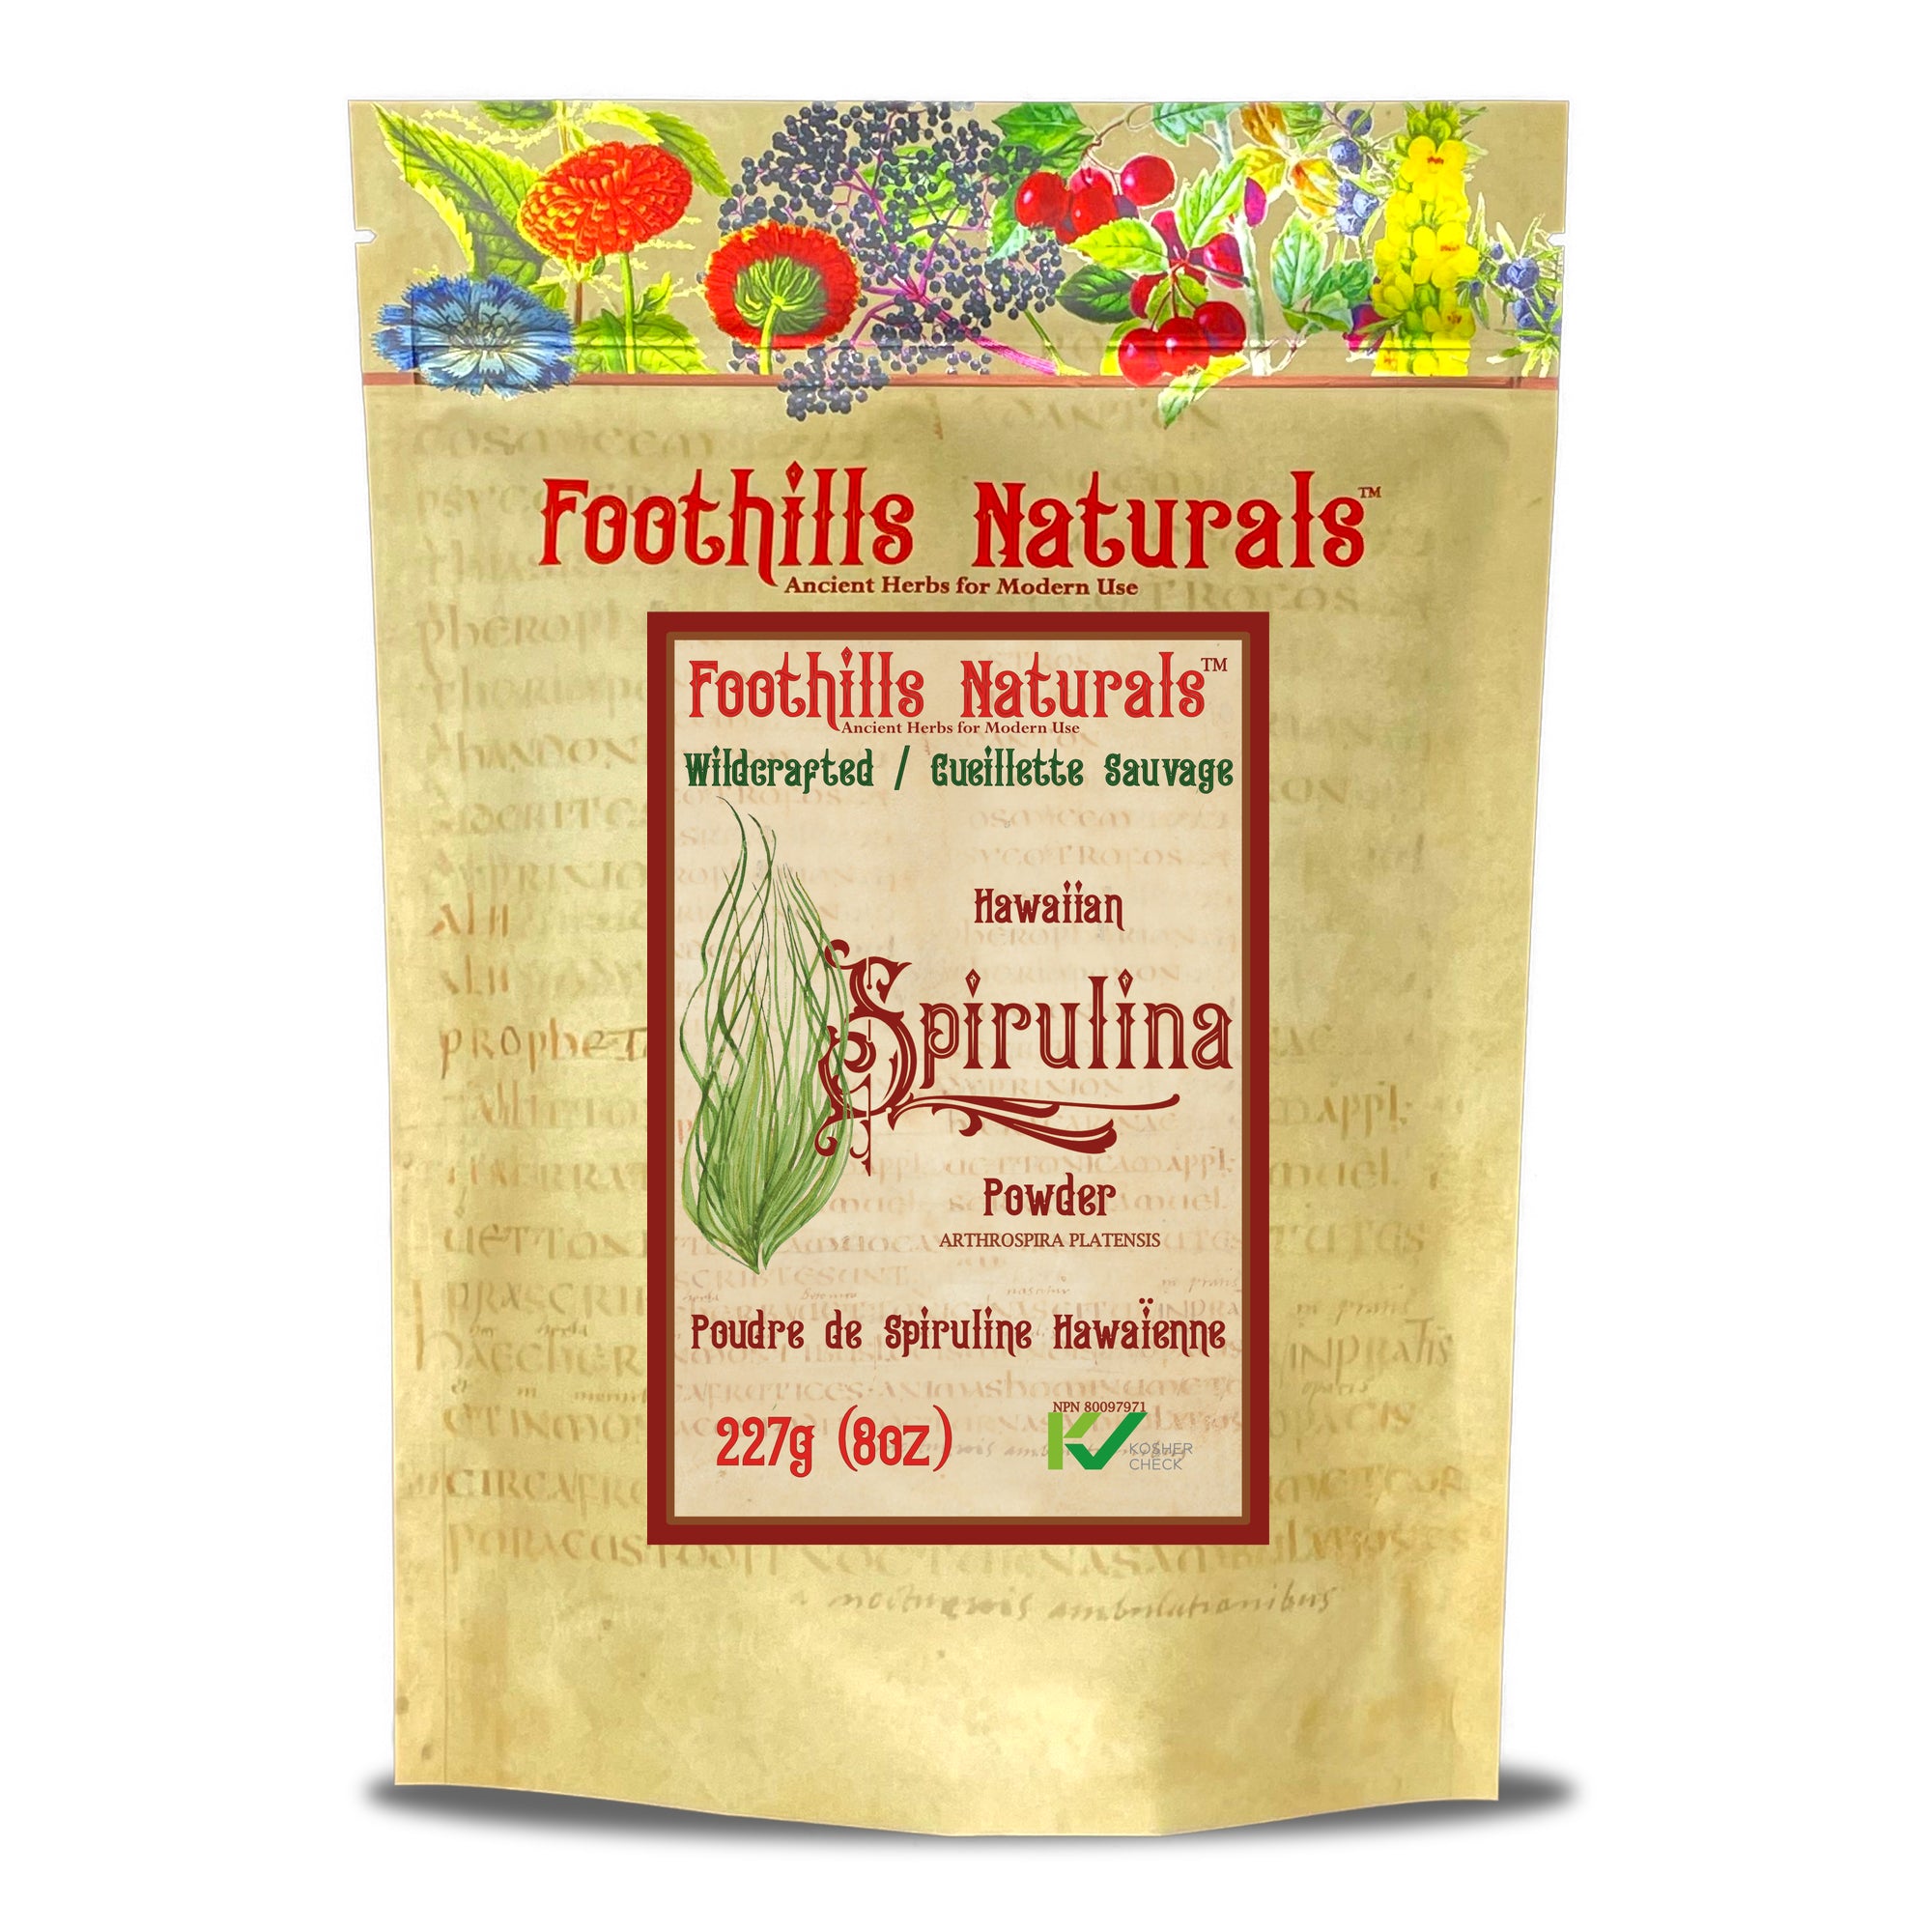 Hawaiian Spirulina Powder - Improve Eyesight, Tissue Formation, Superfood, Vegan